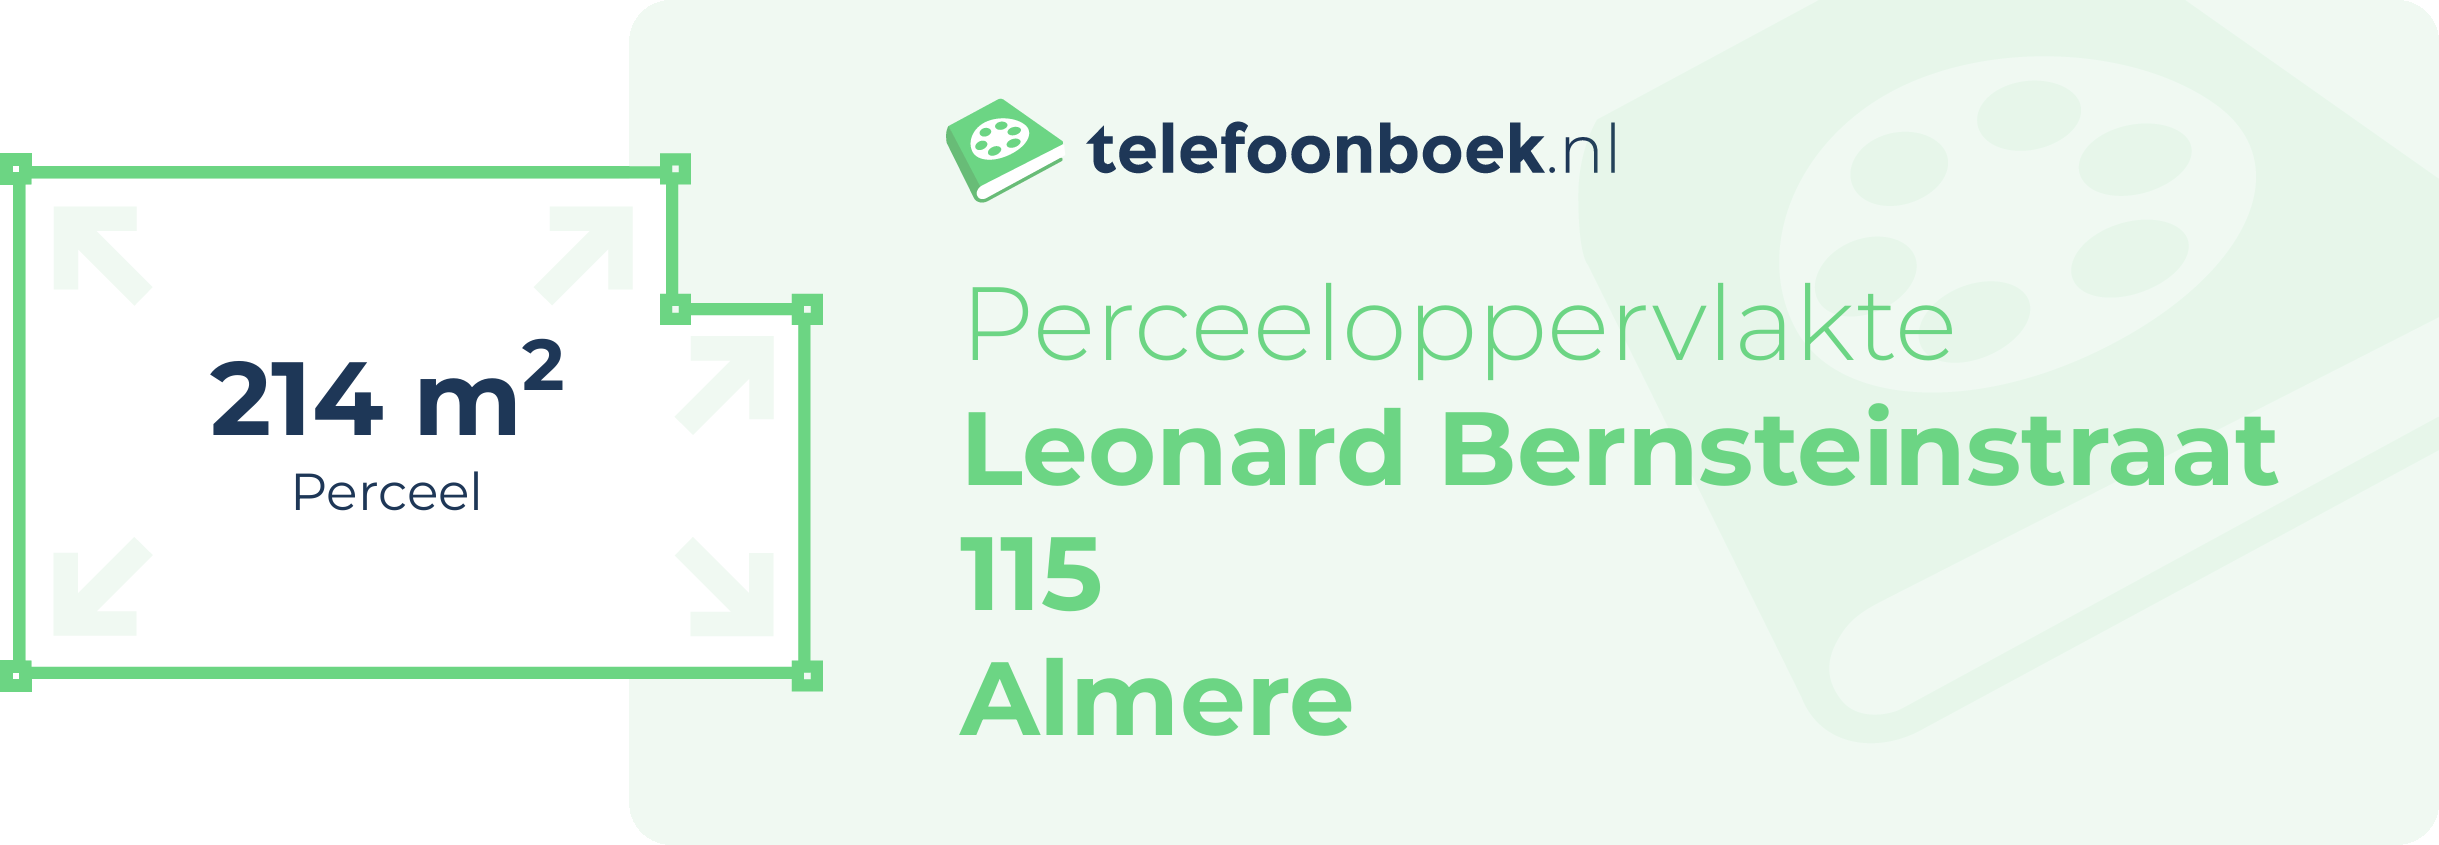 Perceeloppervlakte Leonard Bernsteinstraat 115 Almere